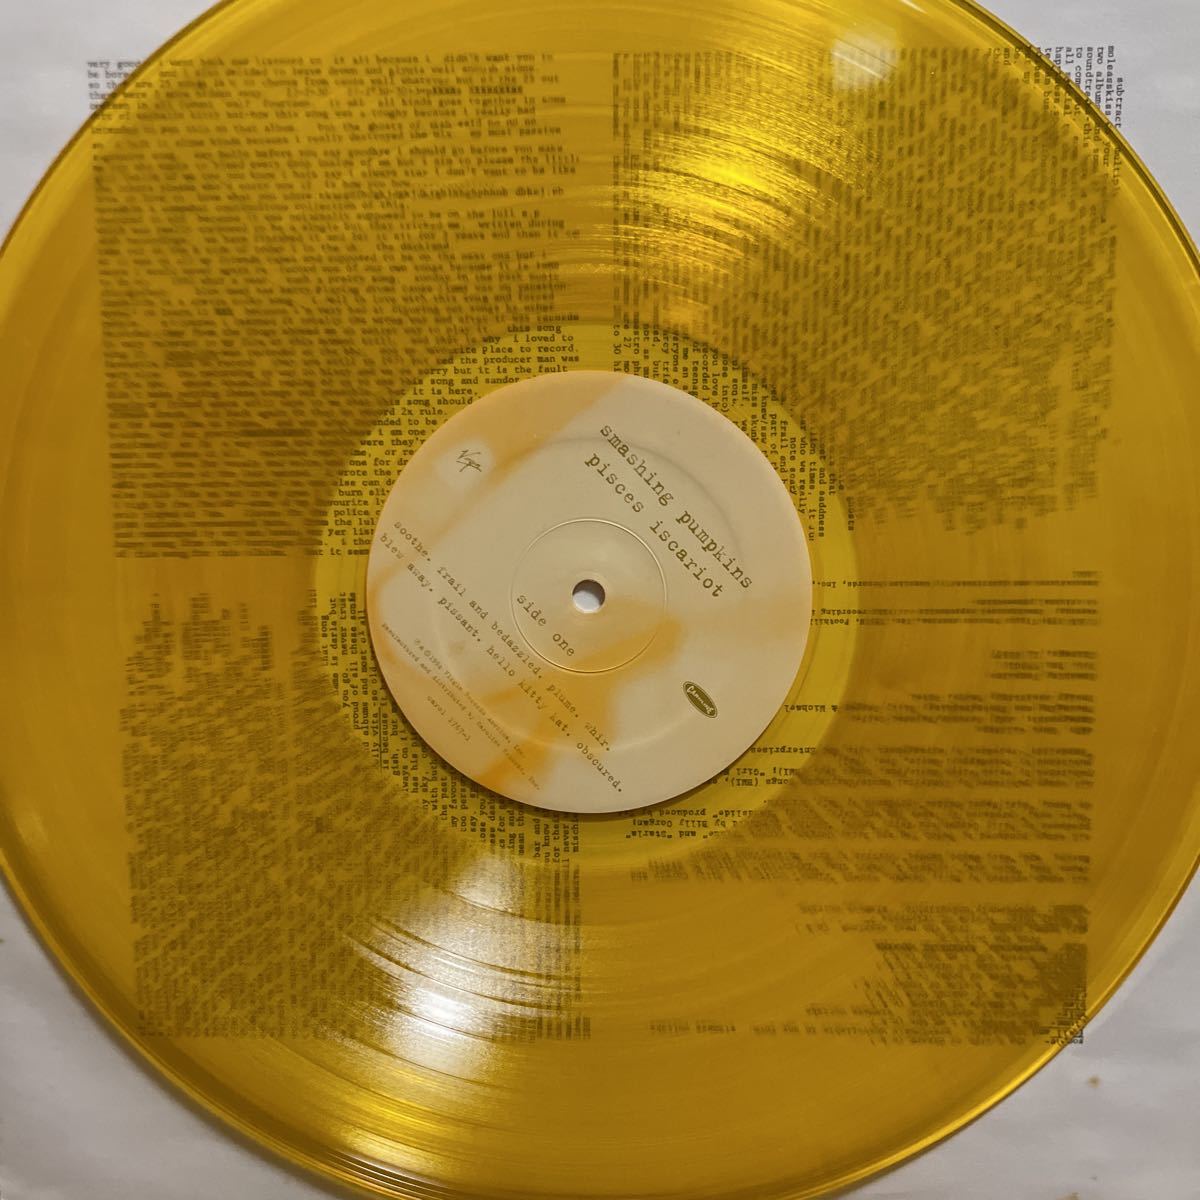 Smashing Pumpkins - Pisces Iscariot LP US original スマッシングパンプキンズ クリアイエロー　vinyl 1994 オリジナルUS盤_画像4